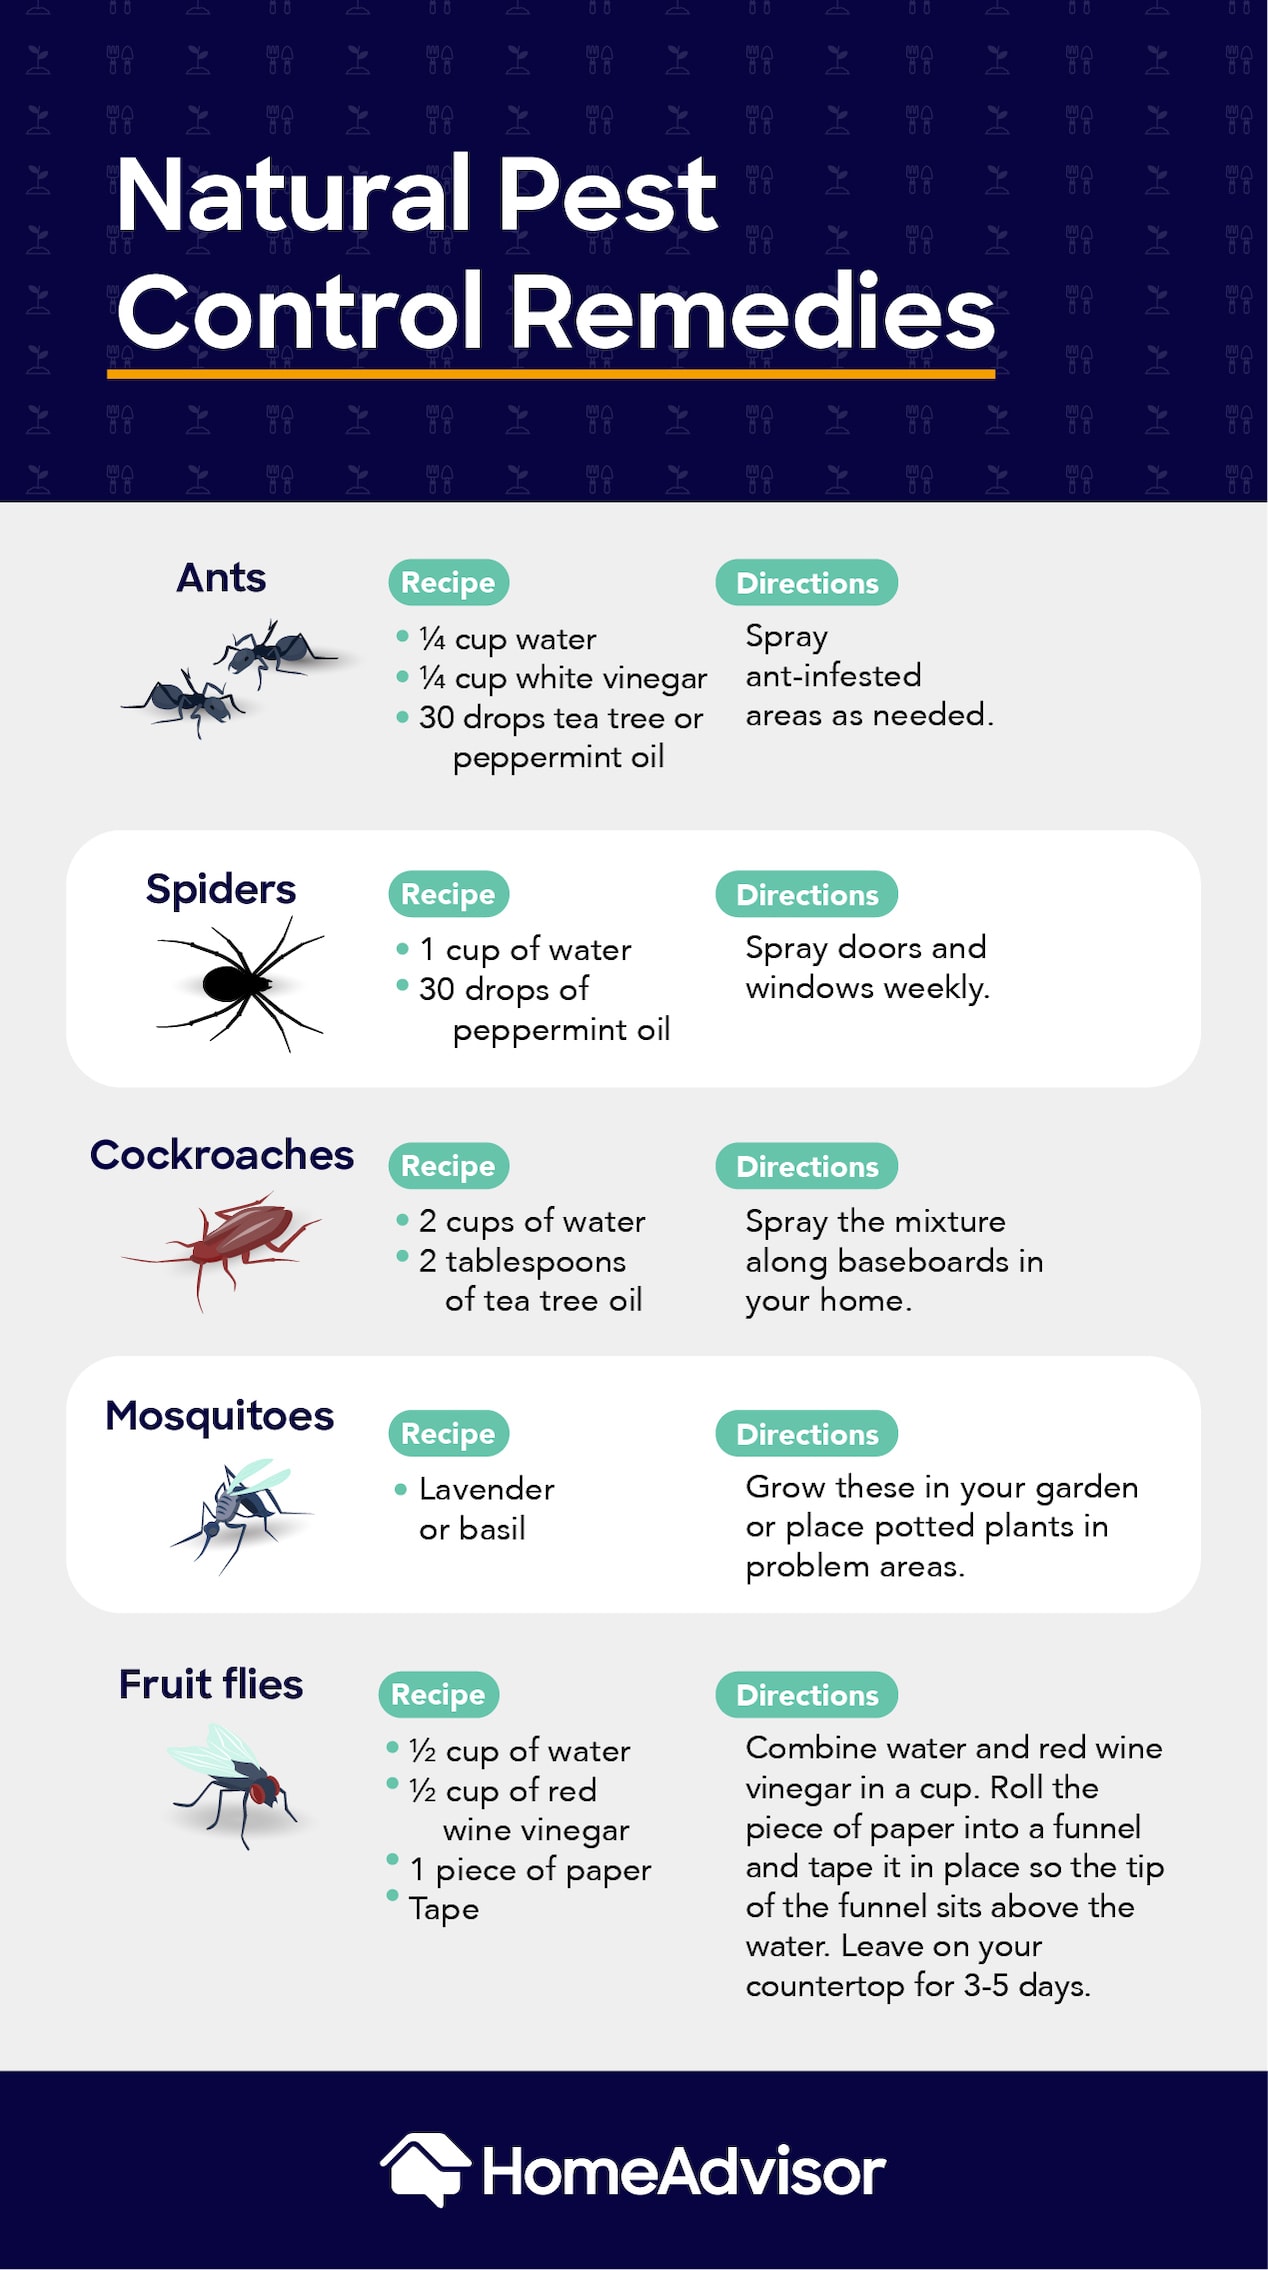 Natural Pest Control Remedies